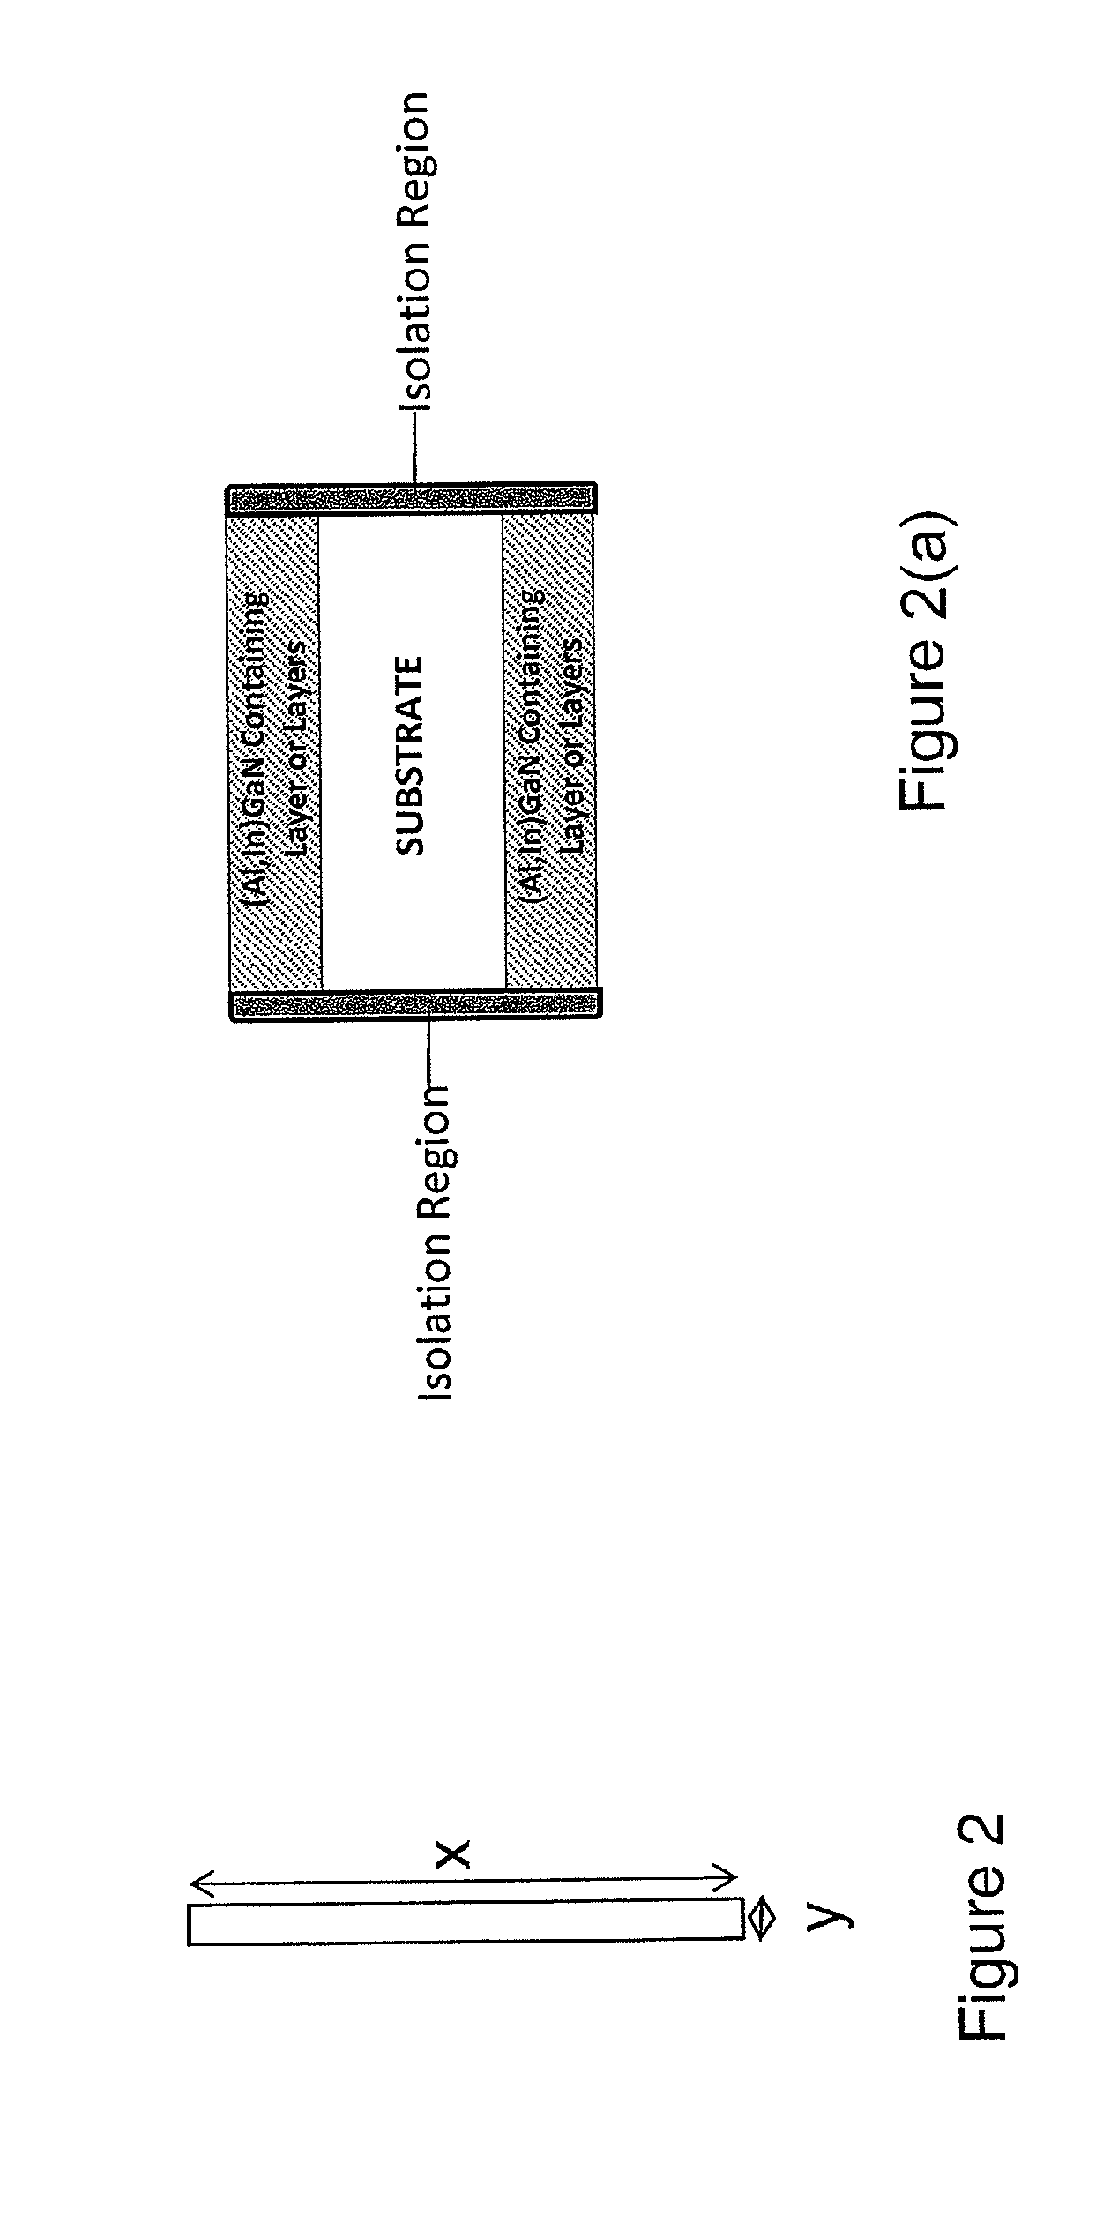 Large-area bulk gallium nitride wafer and method of manufacture